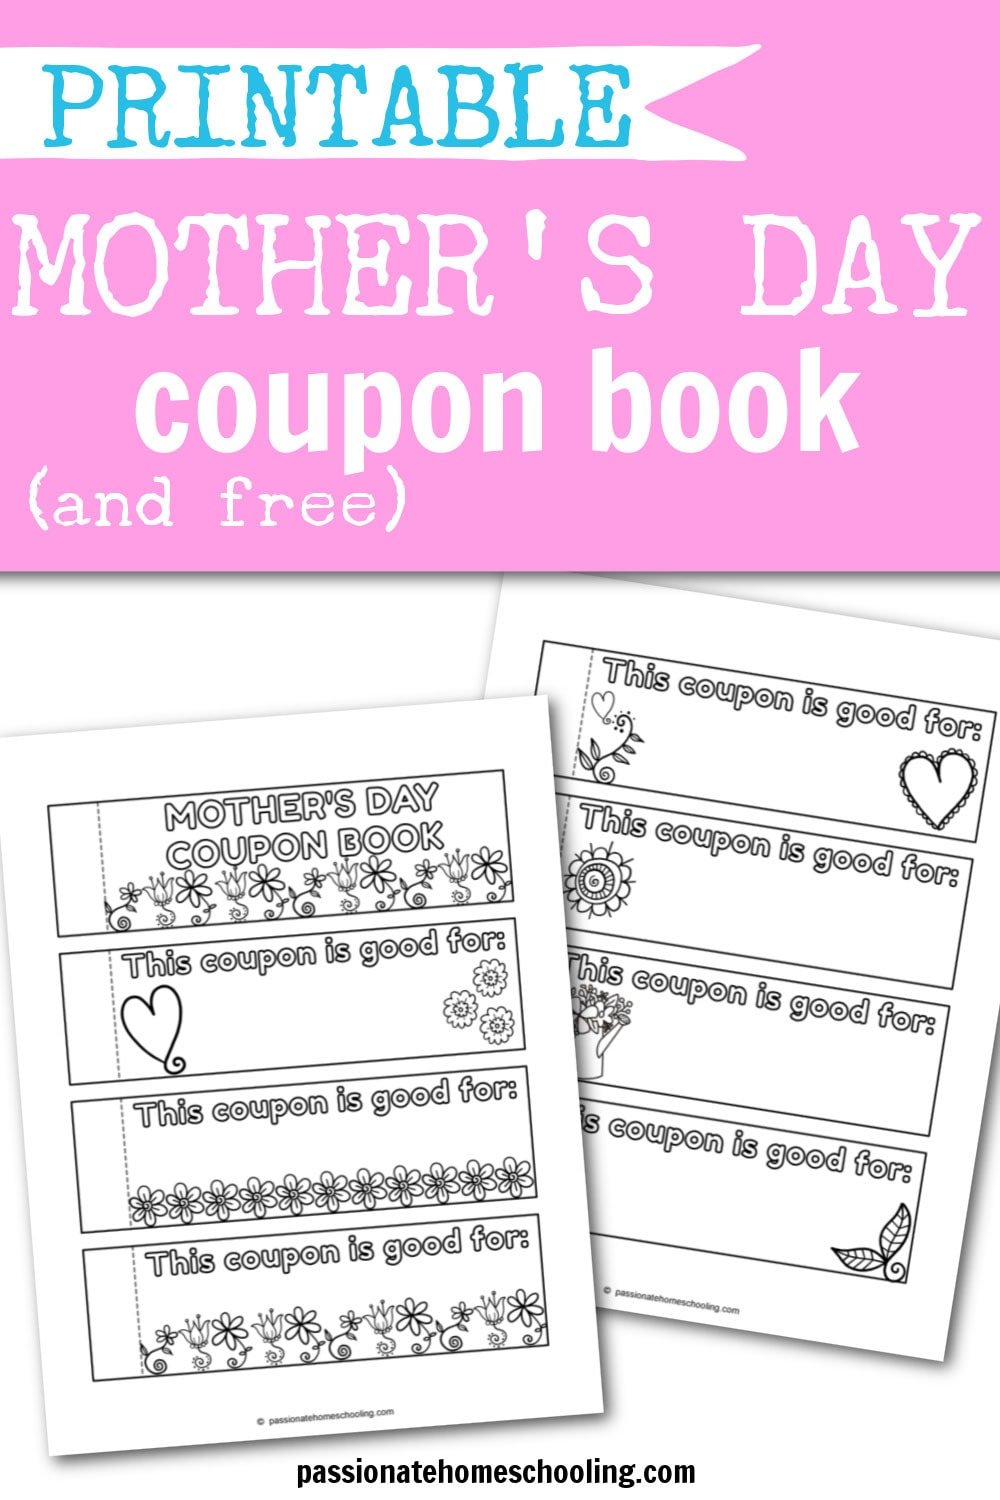 Fun MOTHER'S DAY gift idea - FREE Printables - DIY- Easy